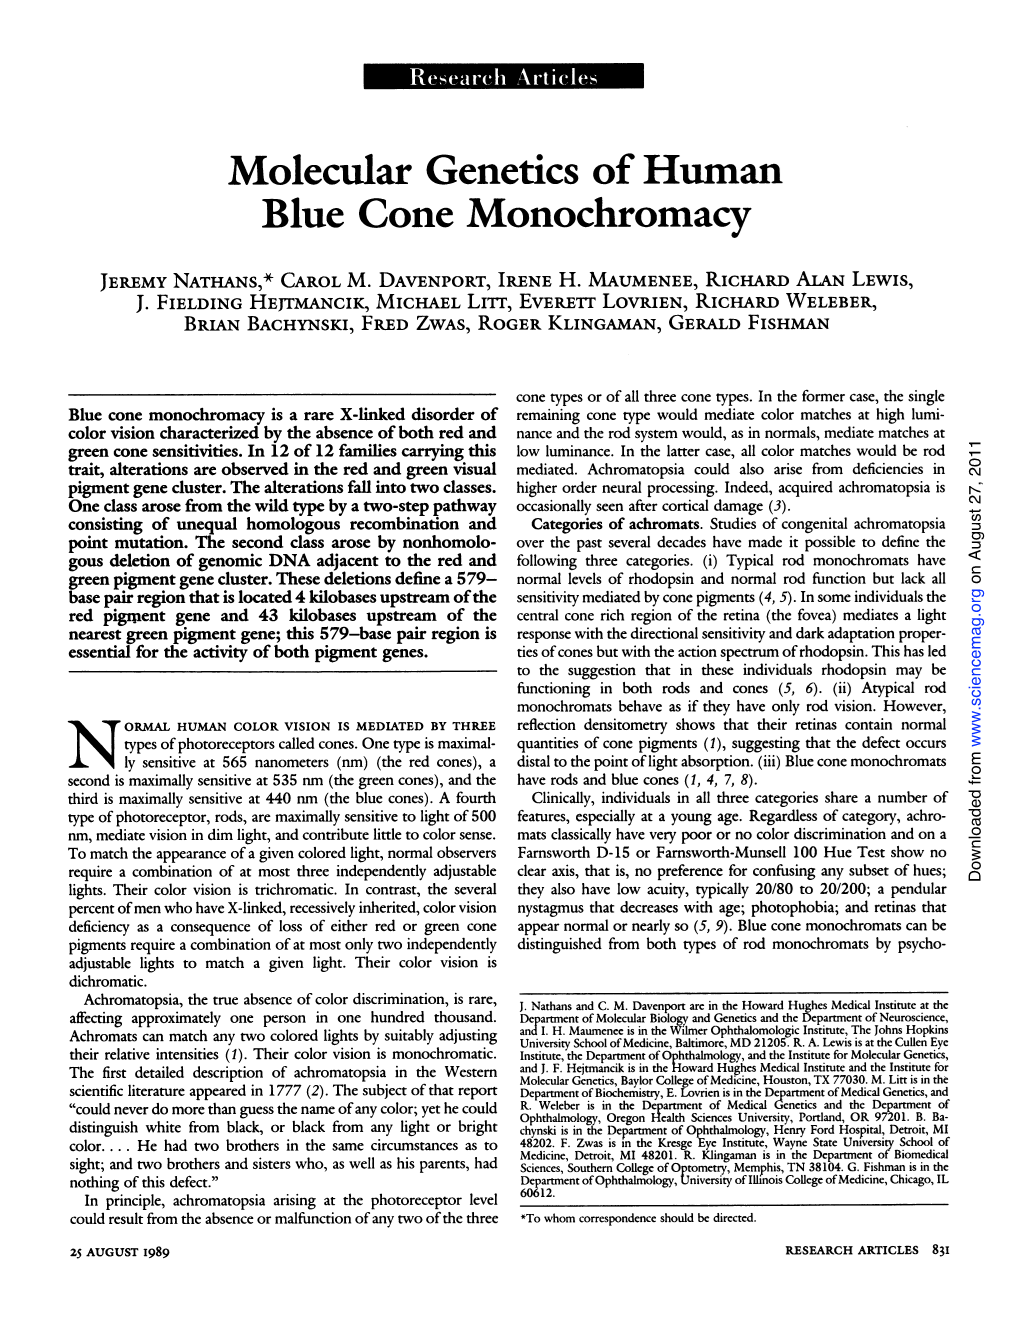 Molecular Genetics of Human Blue Cone Monochromacy